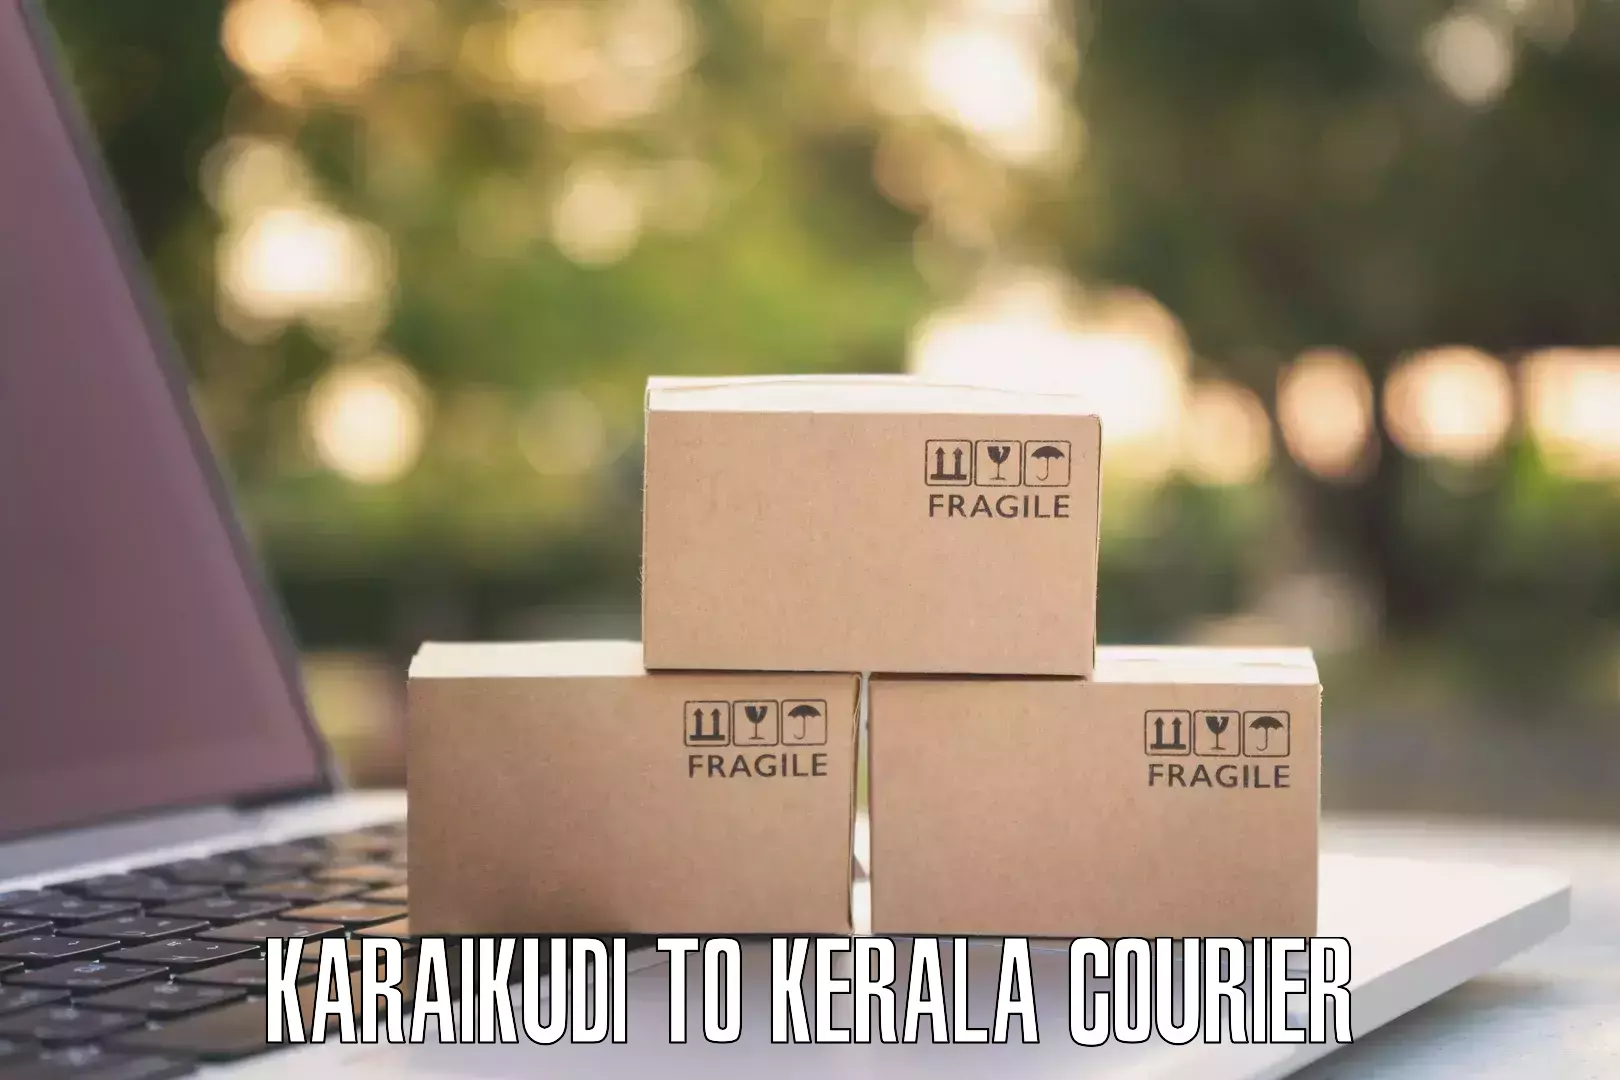 Quick dispatch service Karaikudi to Cochin Port Kochi